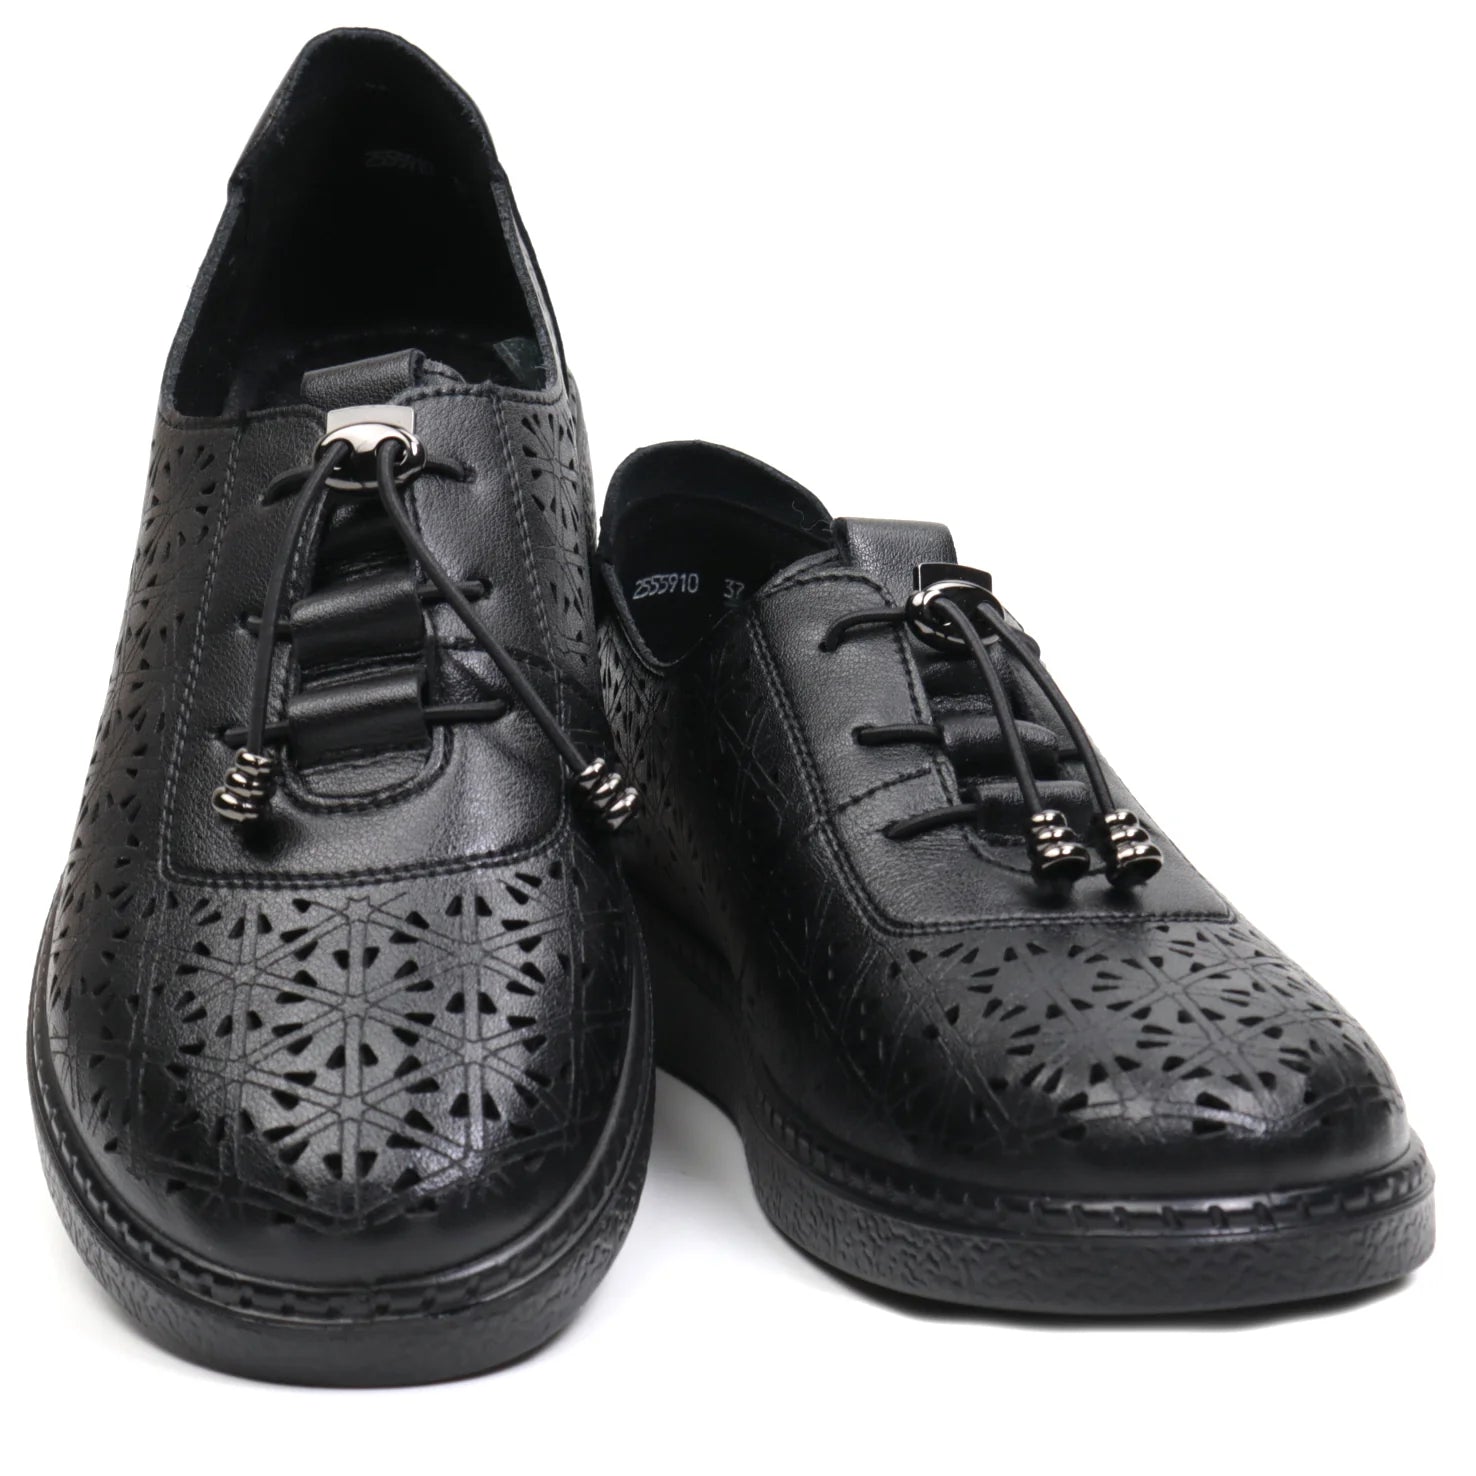 Pantofi dama casual piele naturala 5910 negru